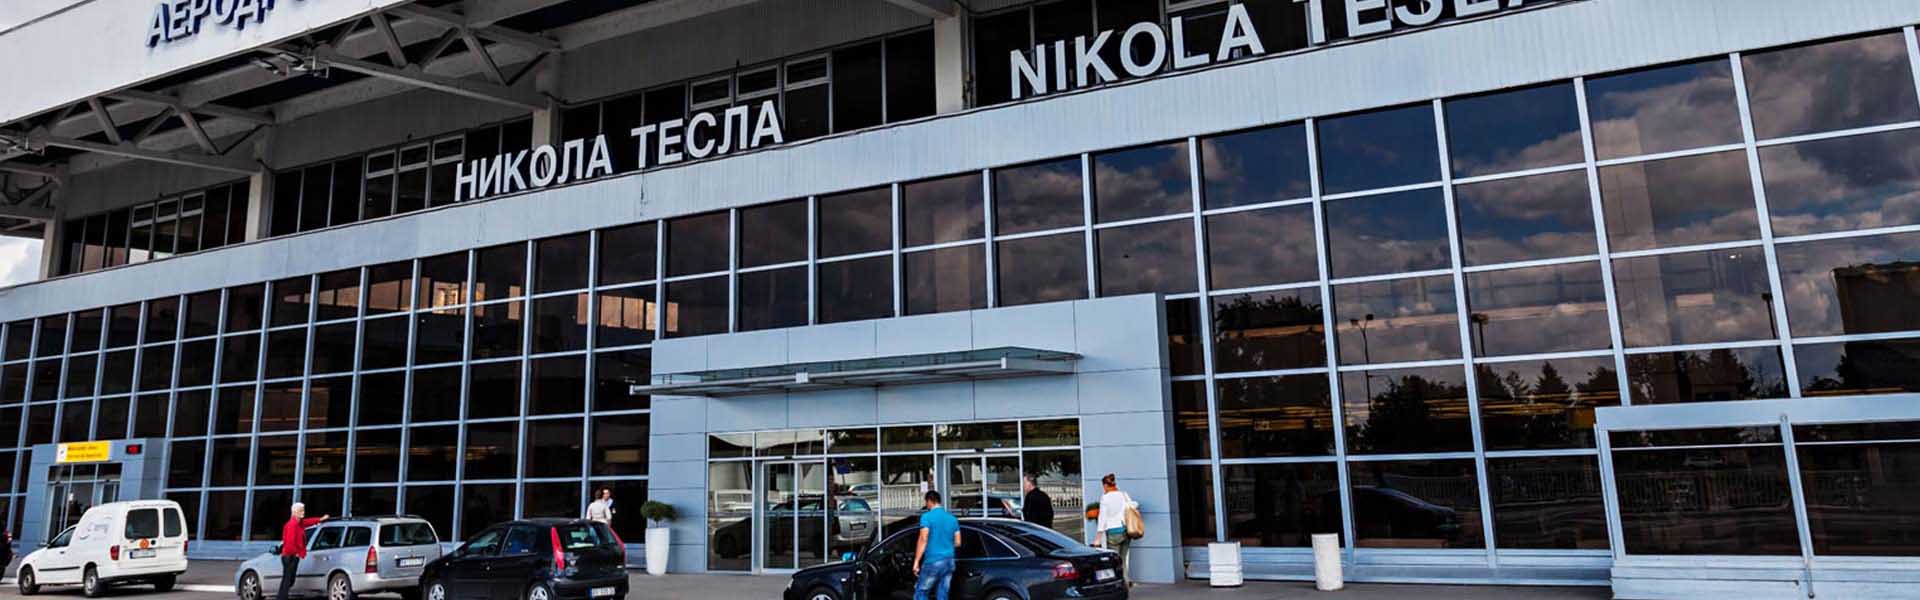 Rent a car Beograd aerodrom Nikola Tesla Niš Car Konstantin